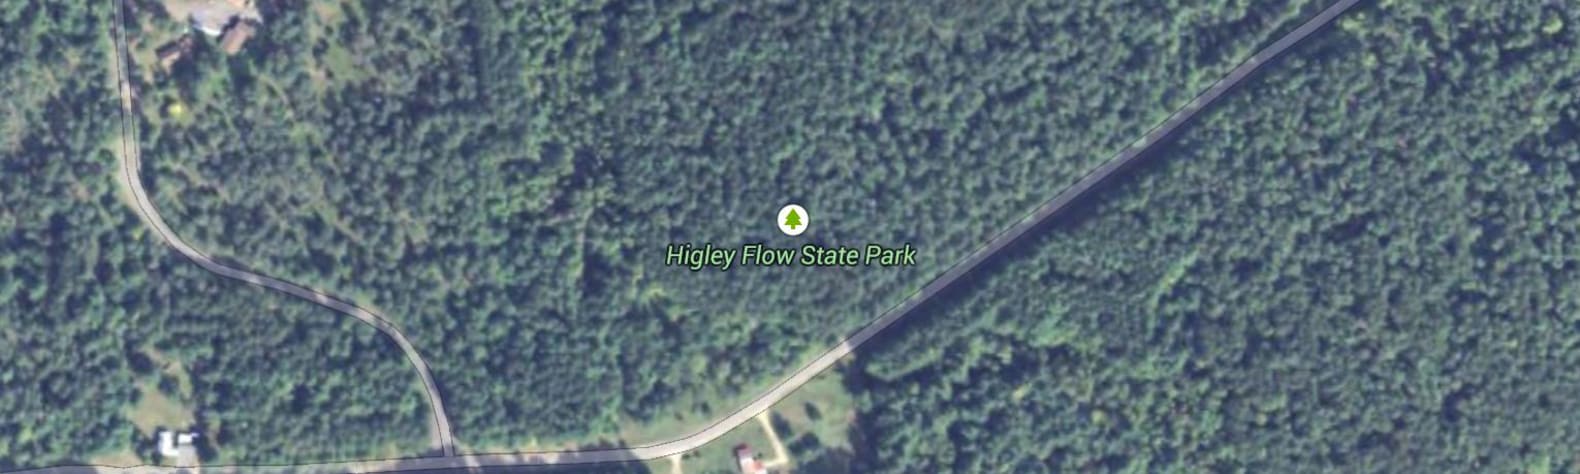 Higley Flow State Park